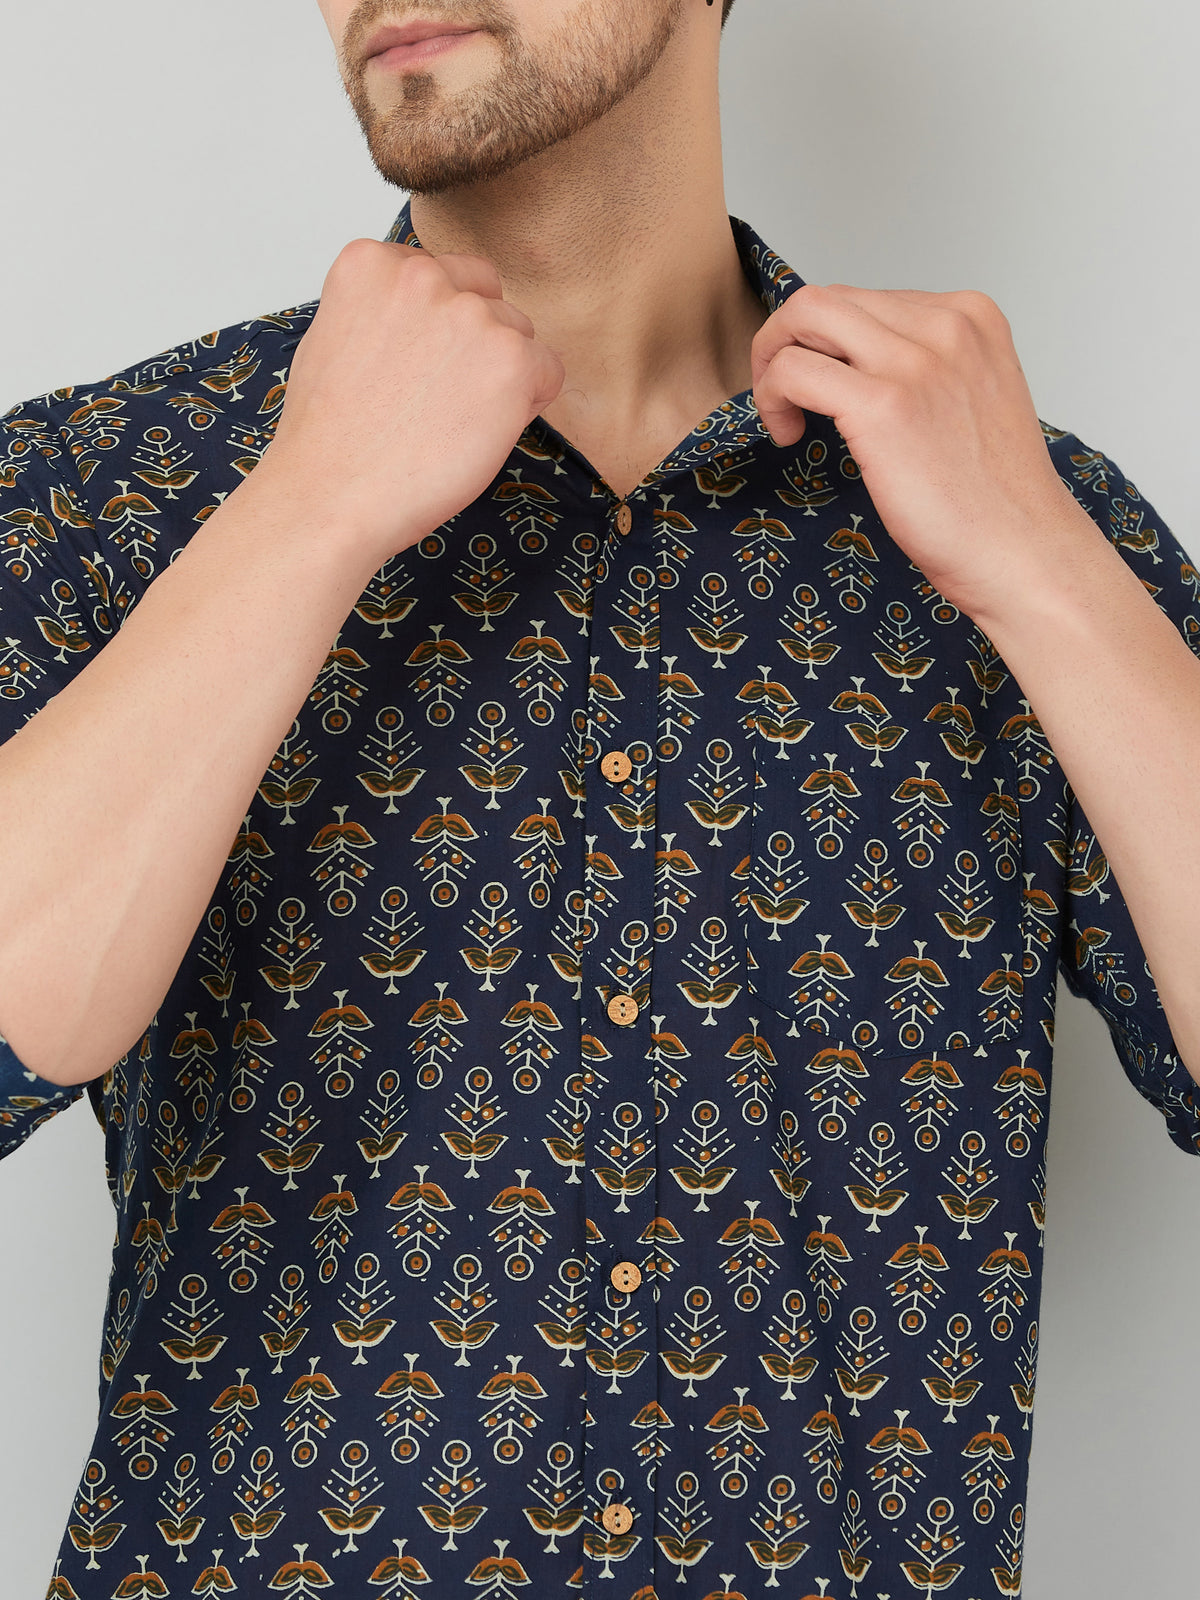 Louis Monarch Premium Blue Jaipuri Printed Cotton Casual Shirt